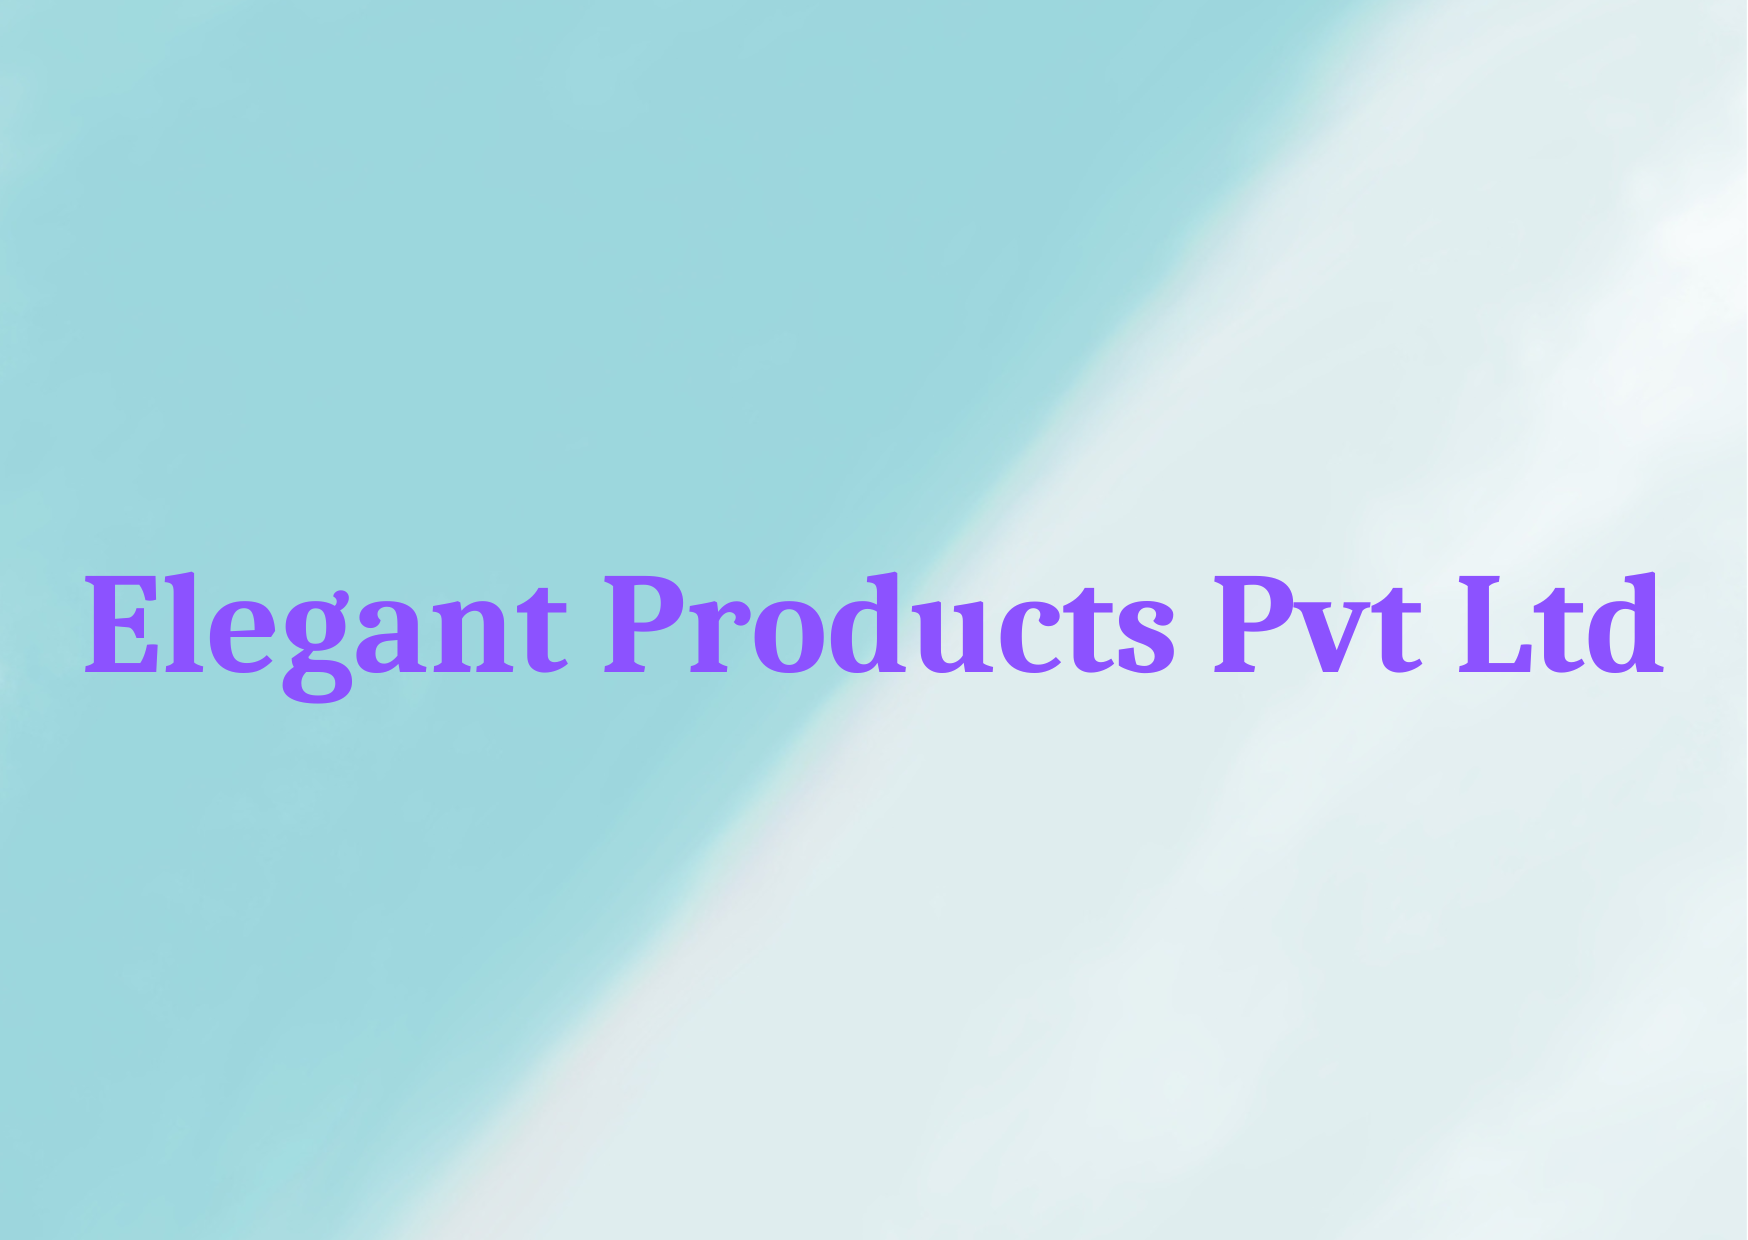  Elegant Products Pvt Ltd,   